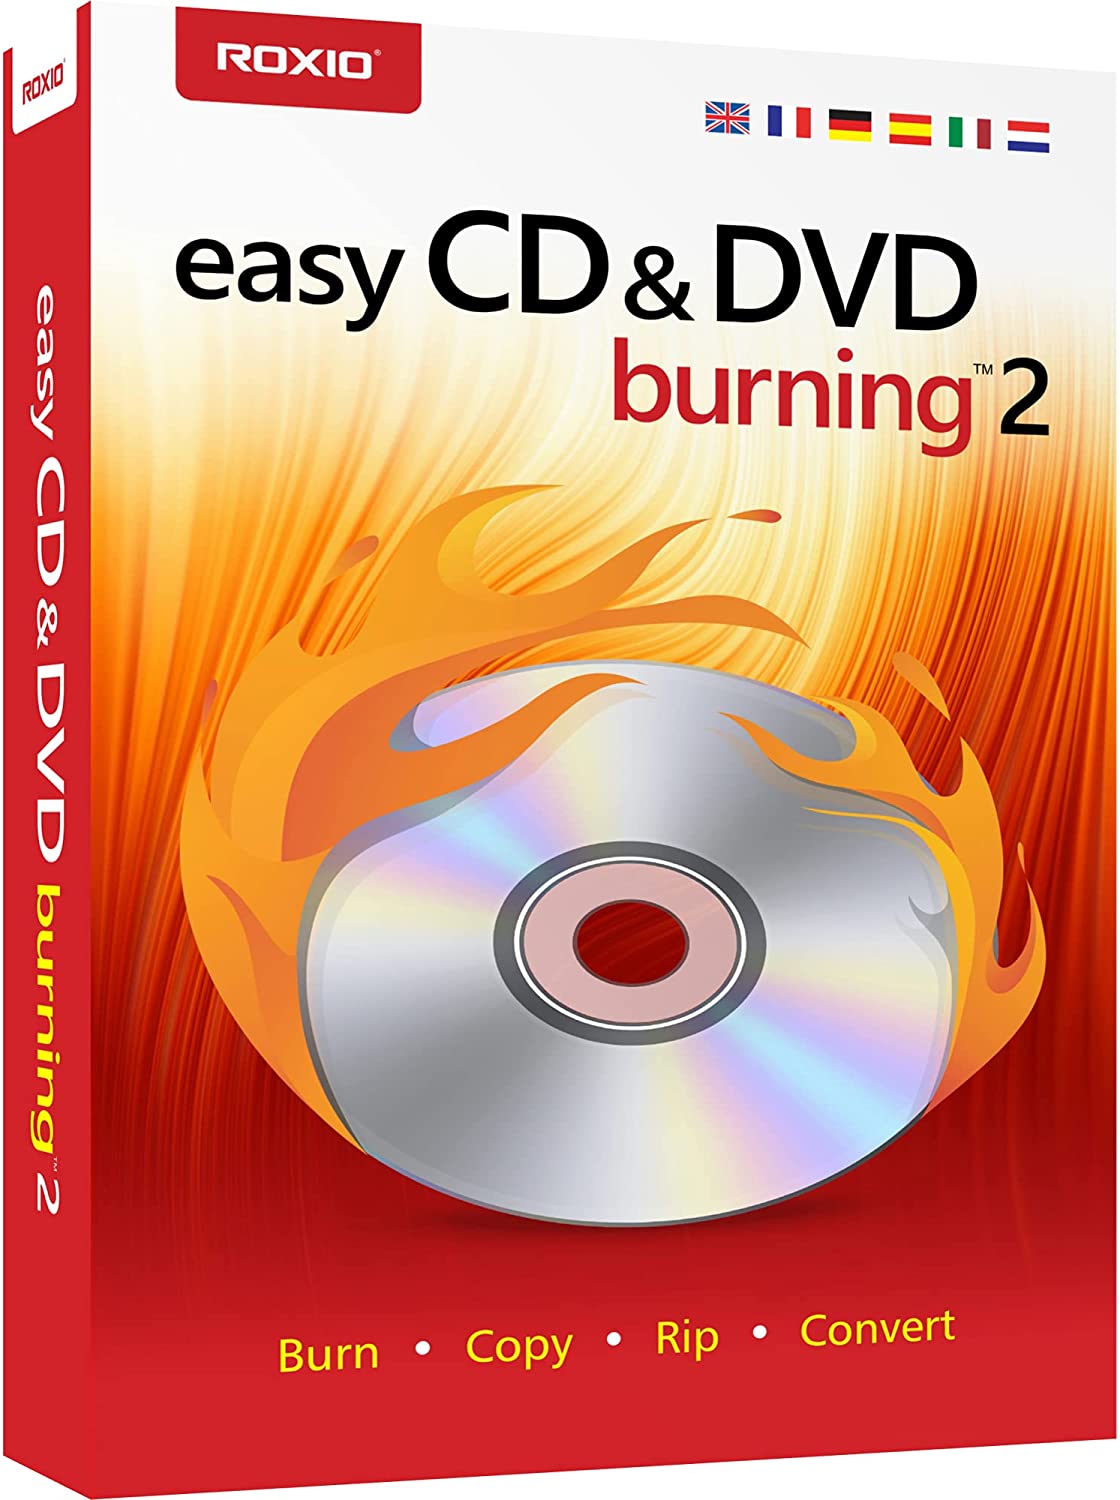 cd duplication software for mac